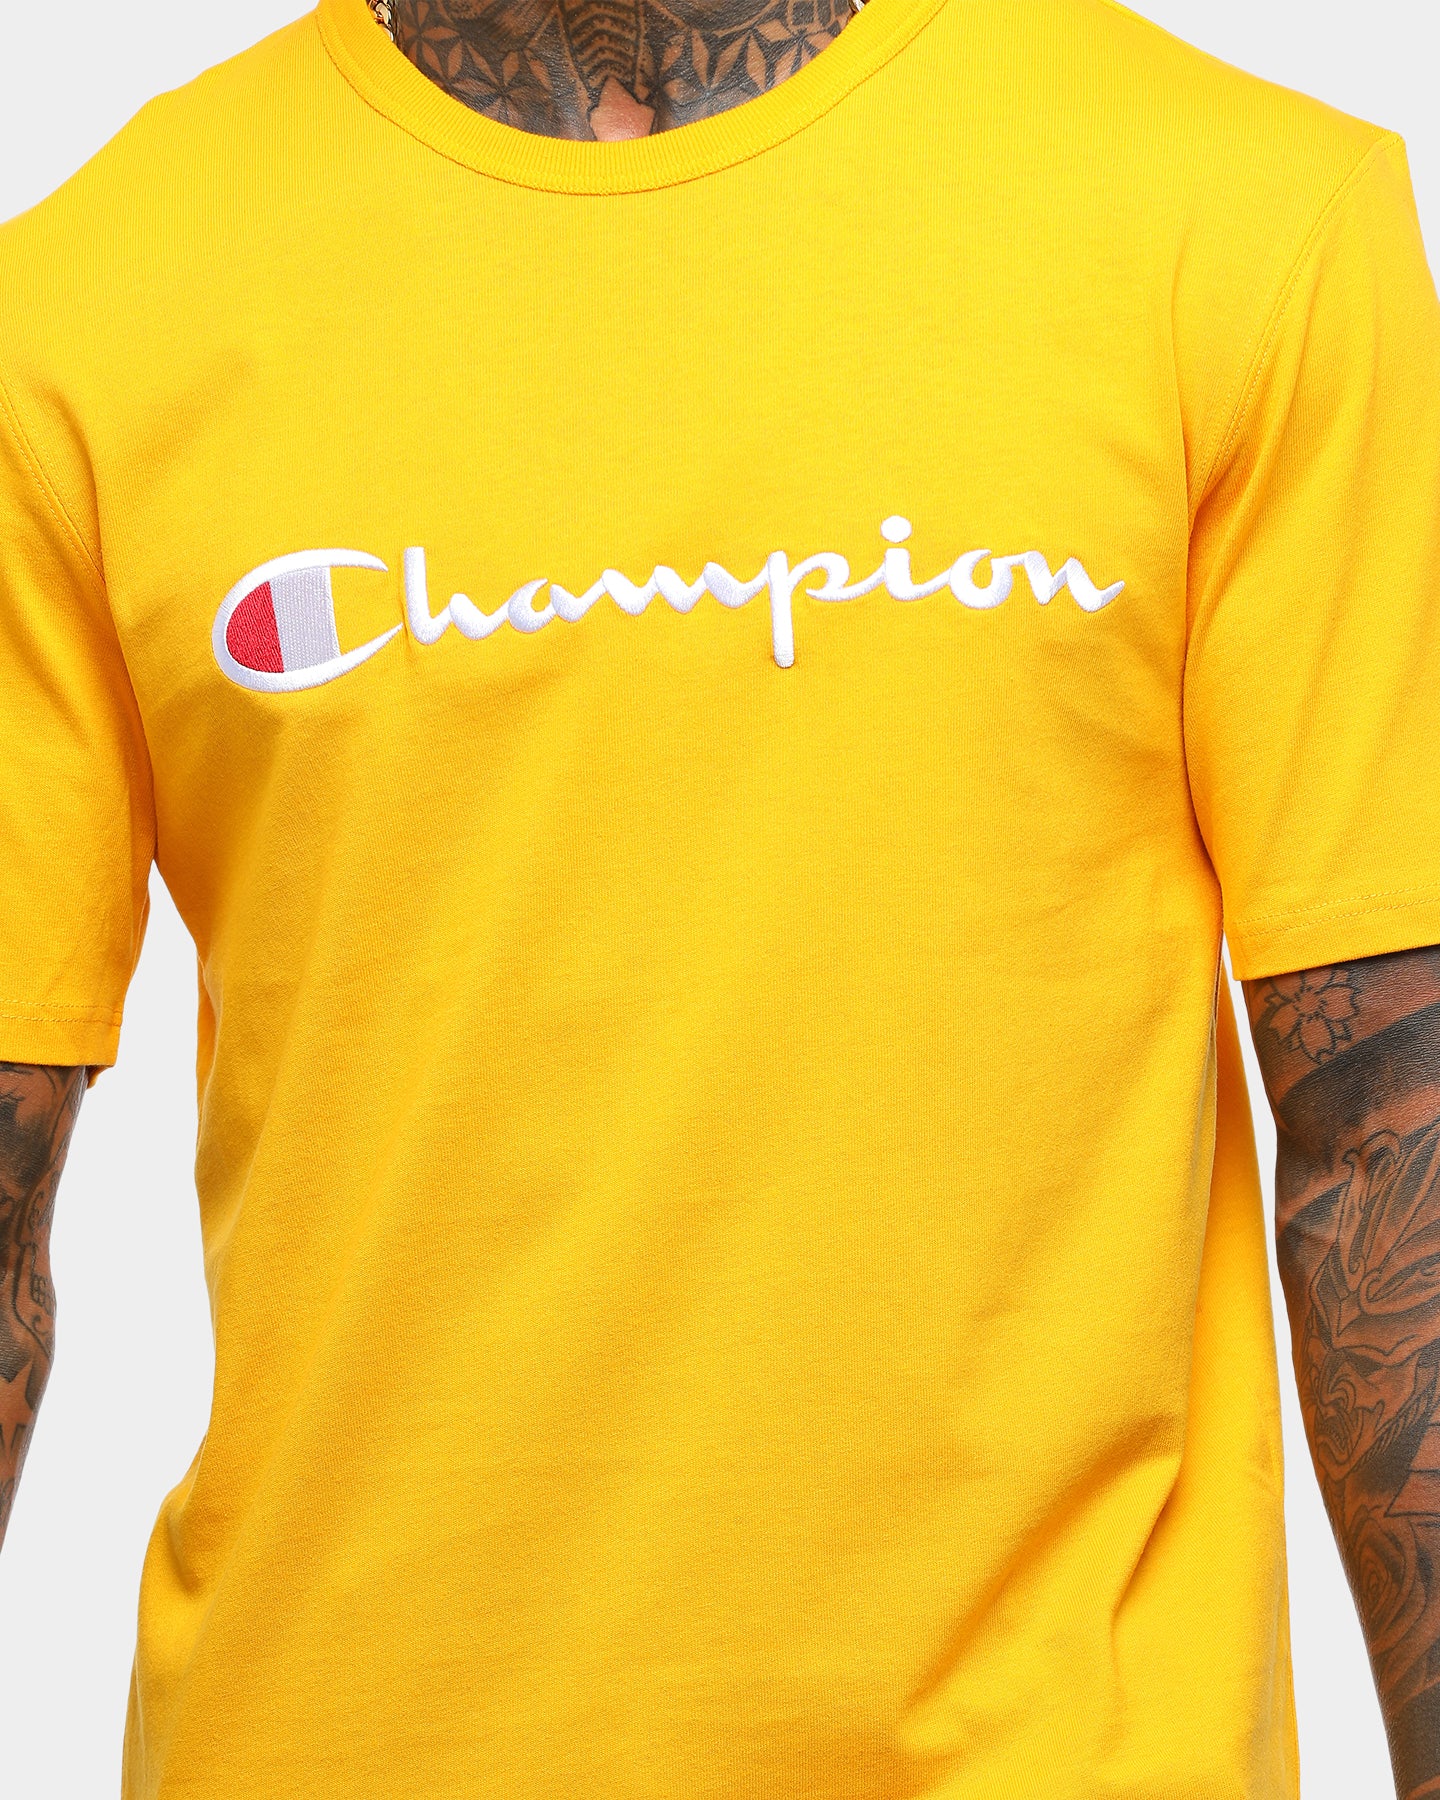 gold champion t shirt